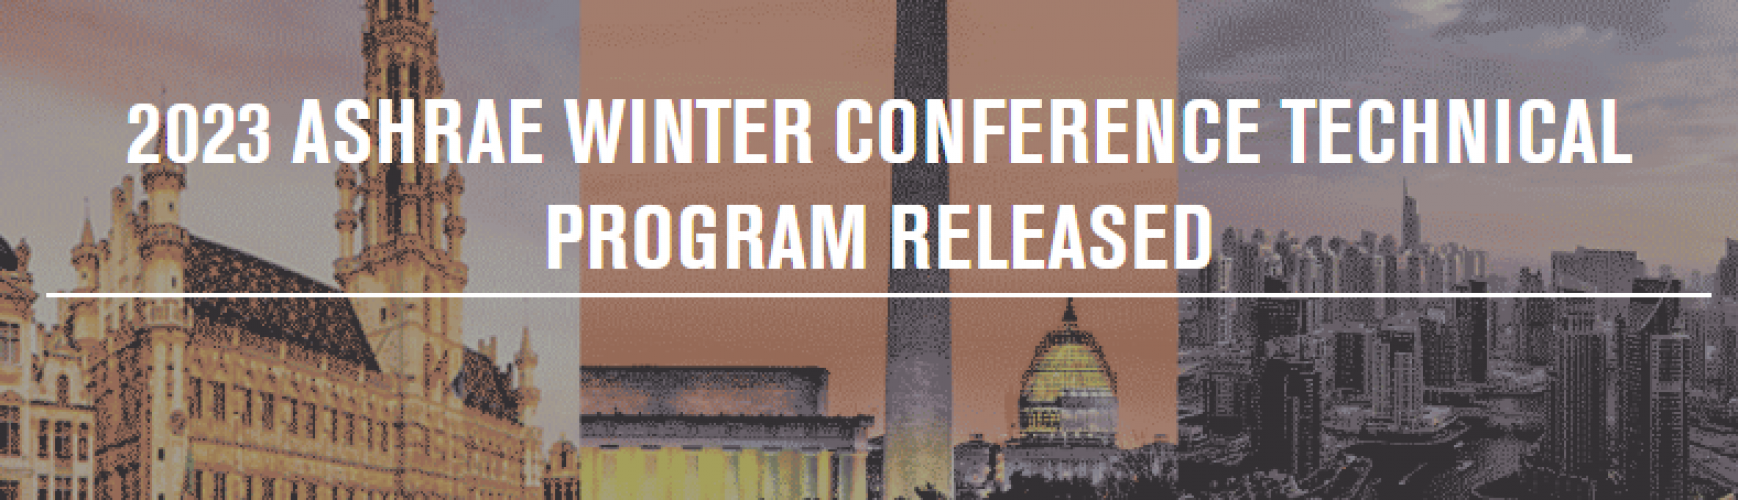 2023-ashrae-winter-conference-technical-program-released